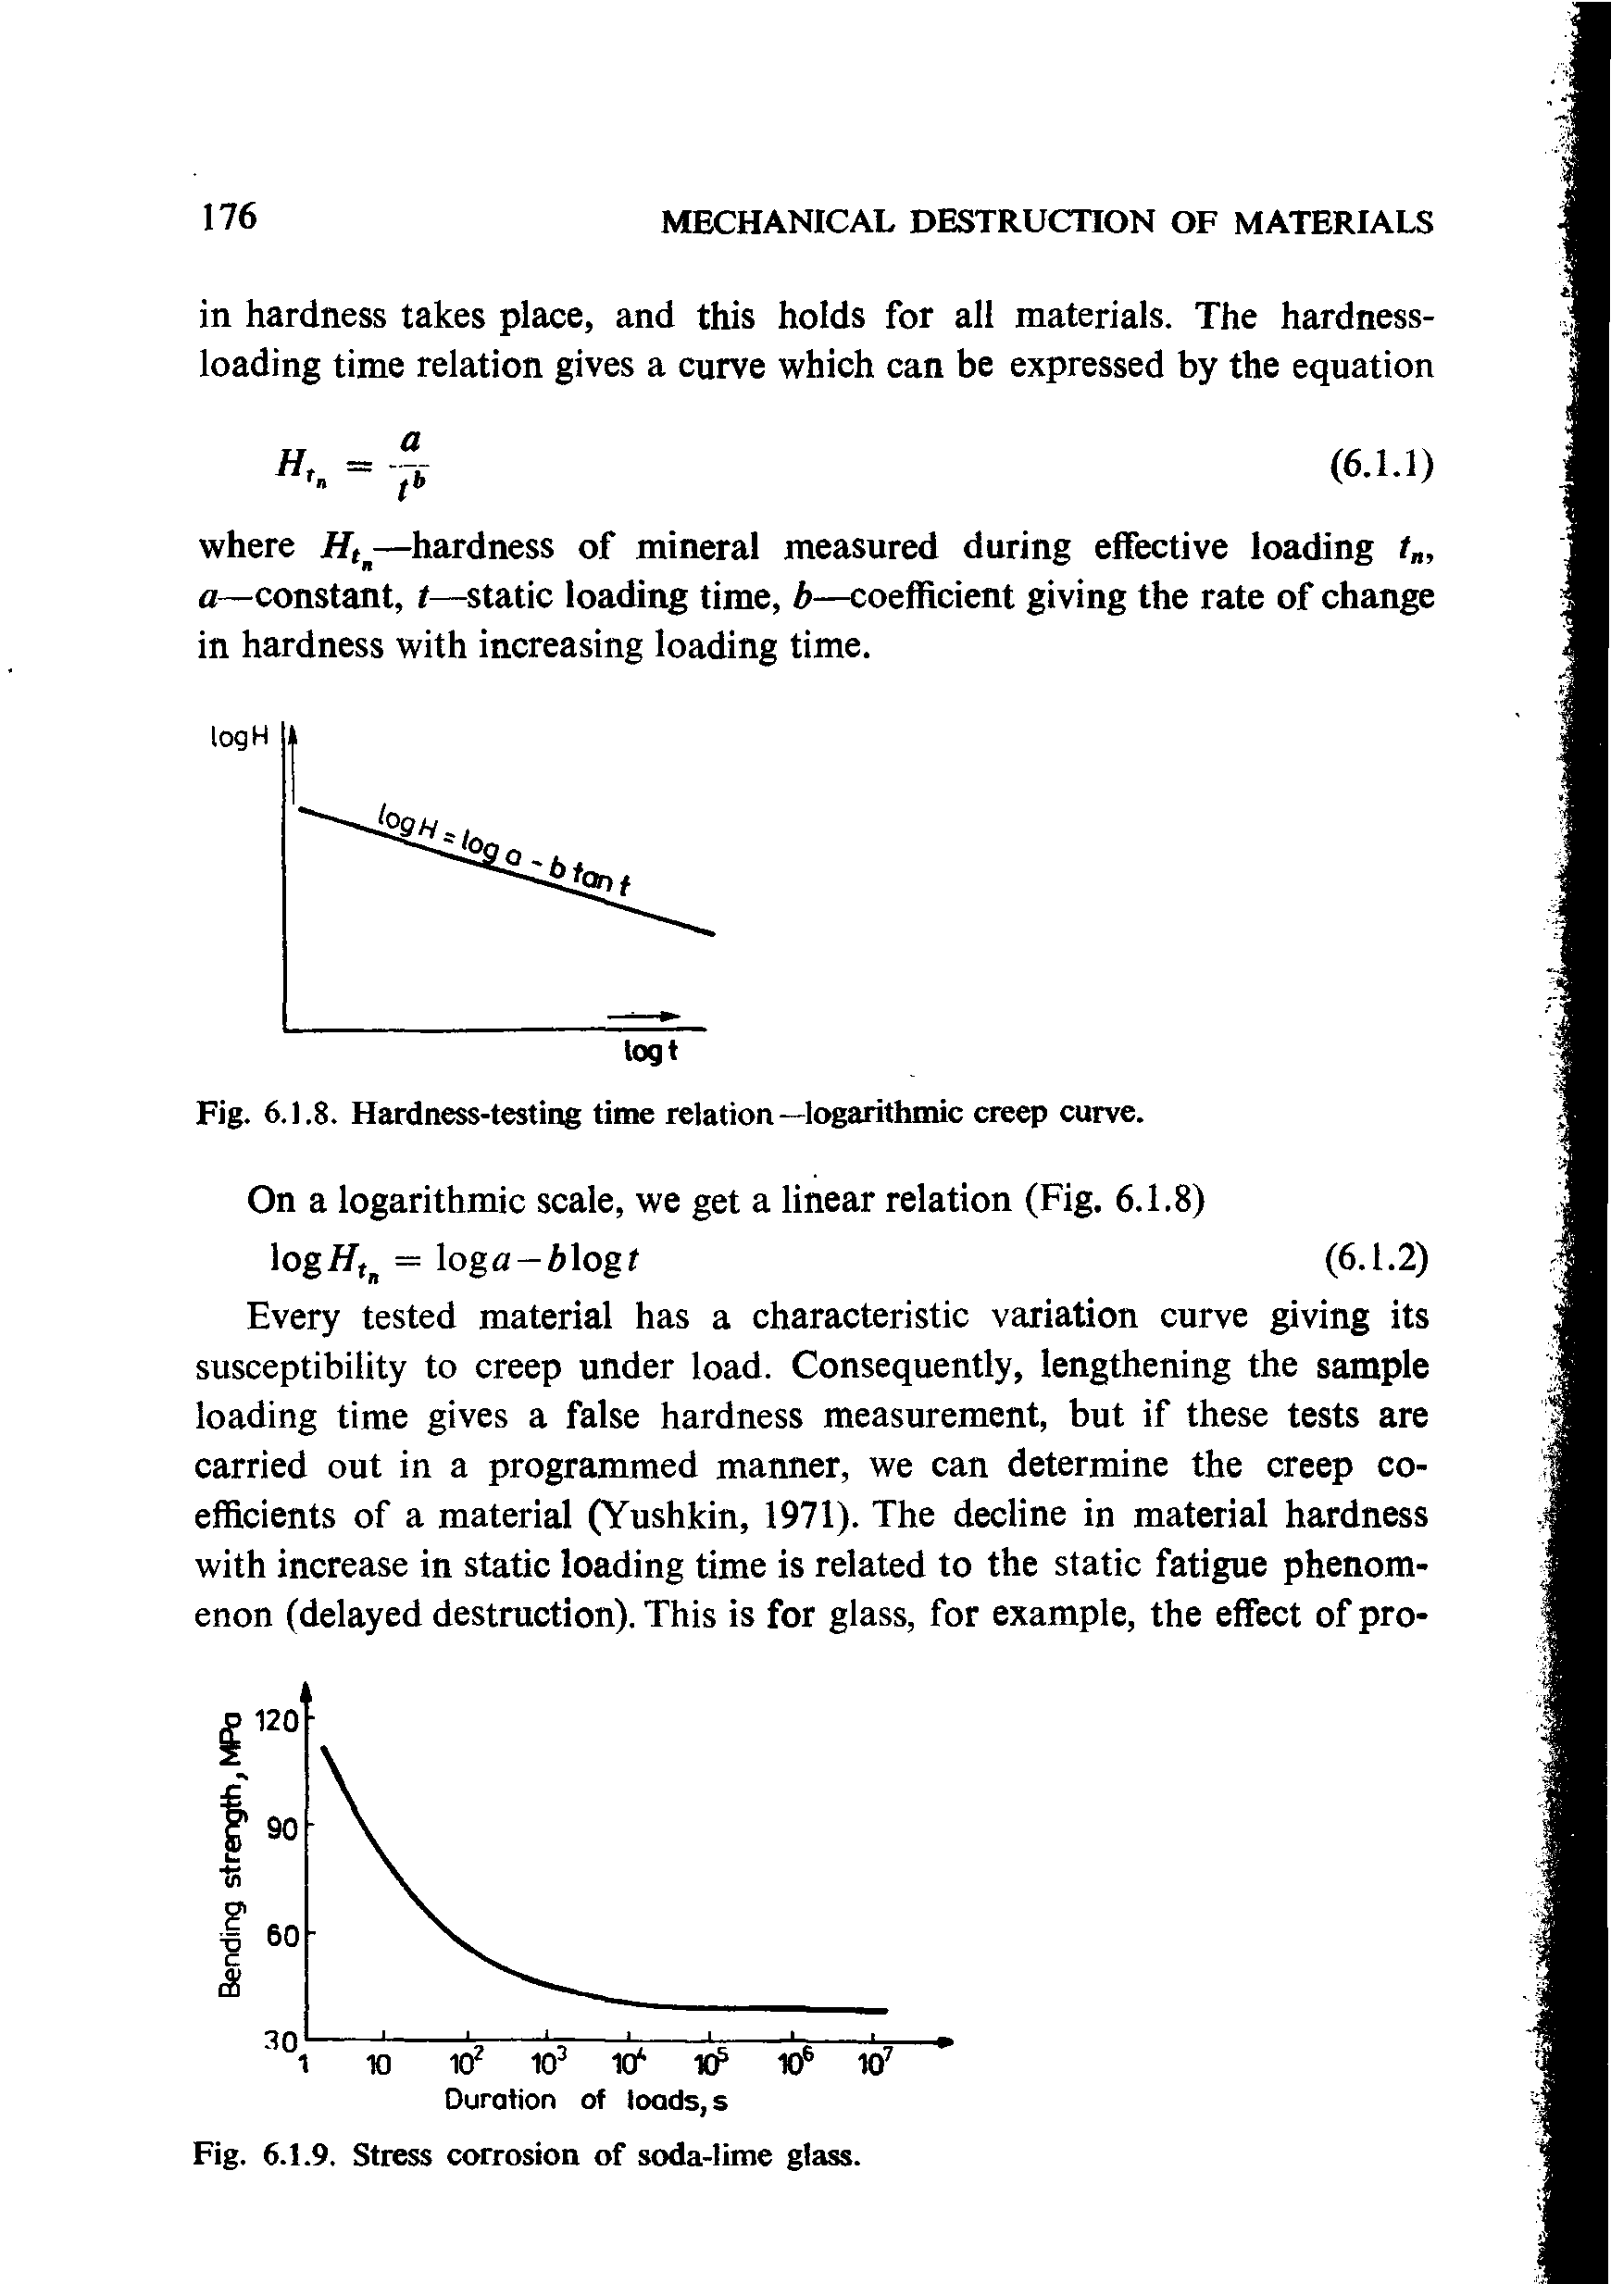 Fig. 6.1.8. Hardness-testing time relation—logarithmic creep curve.